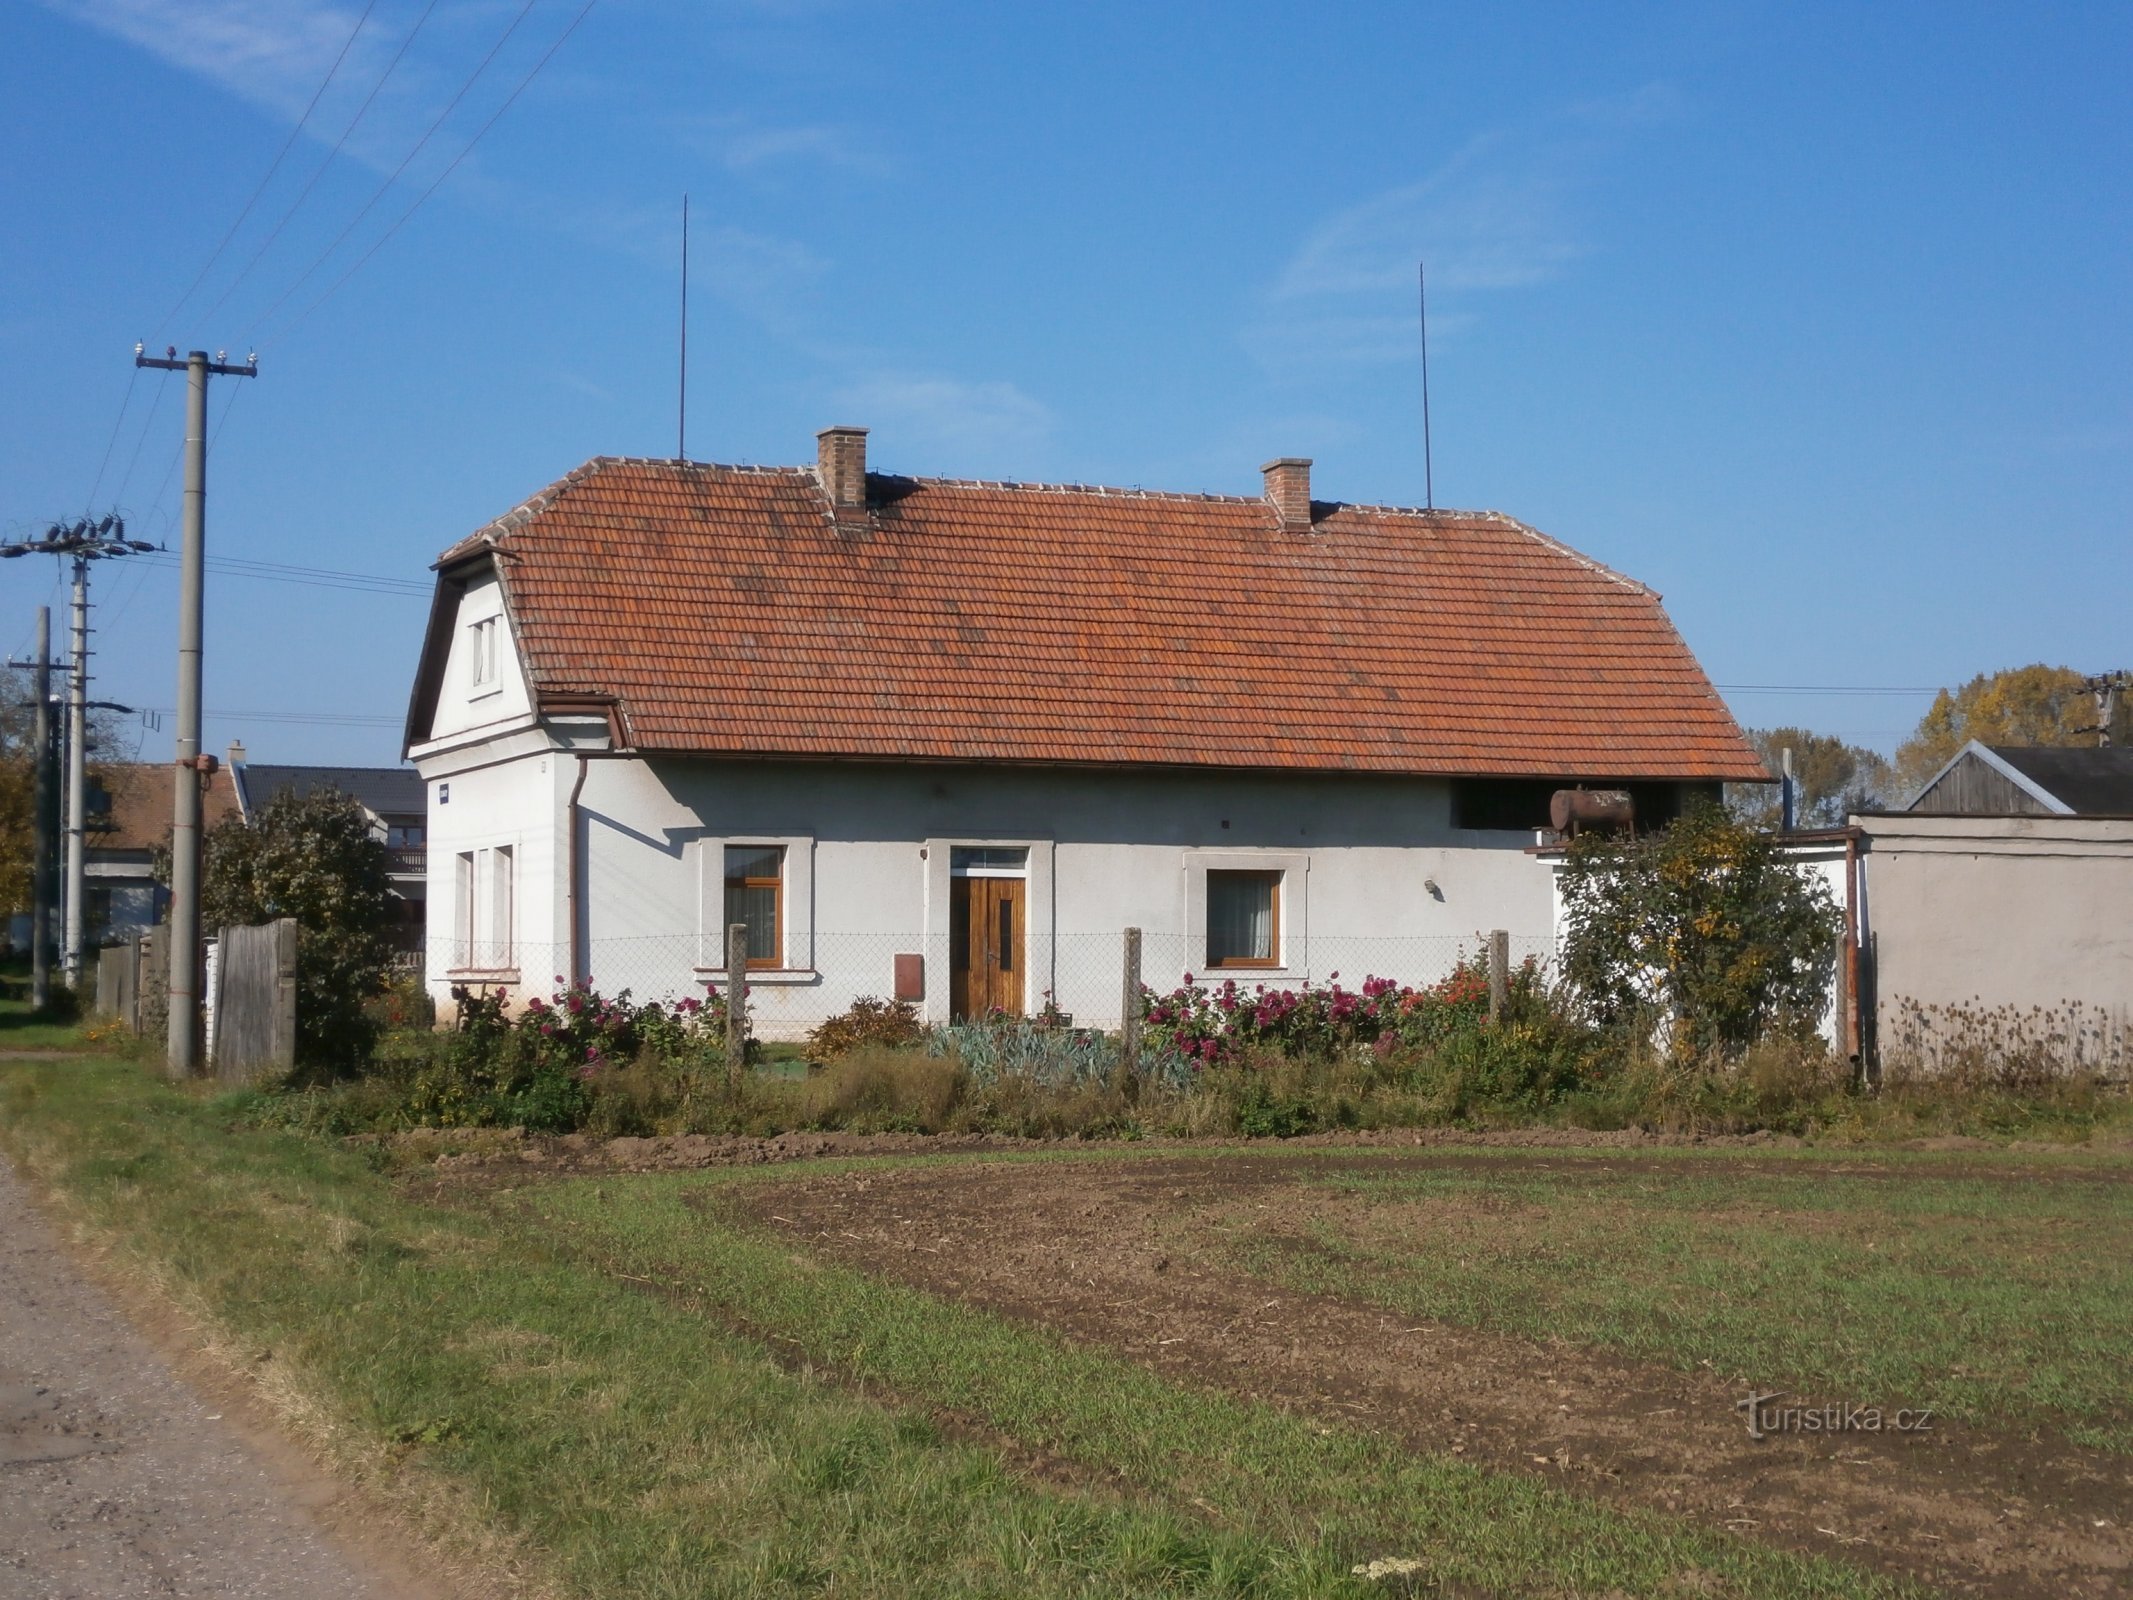 U Studánky nr. 326 (Hradec Králové)